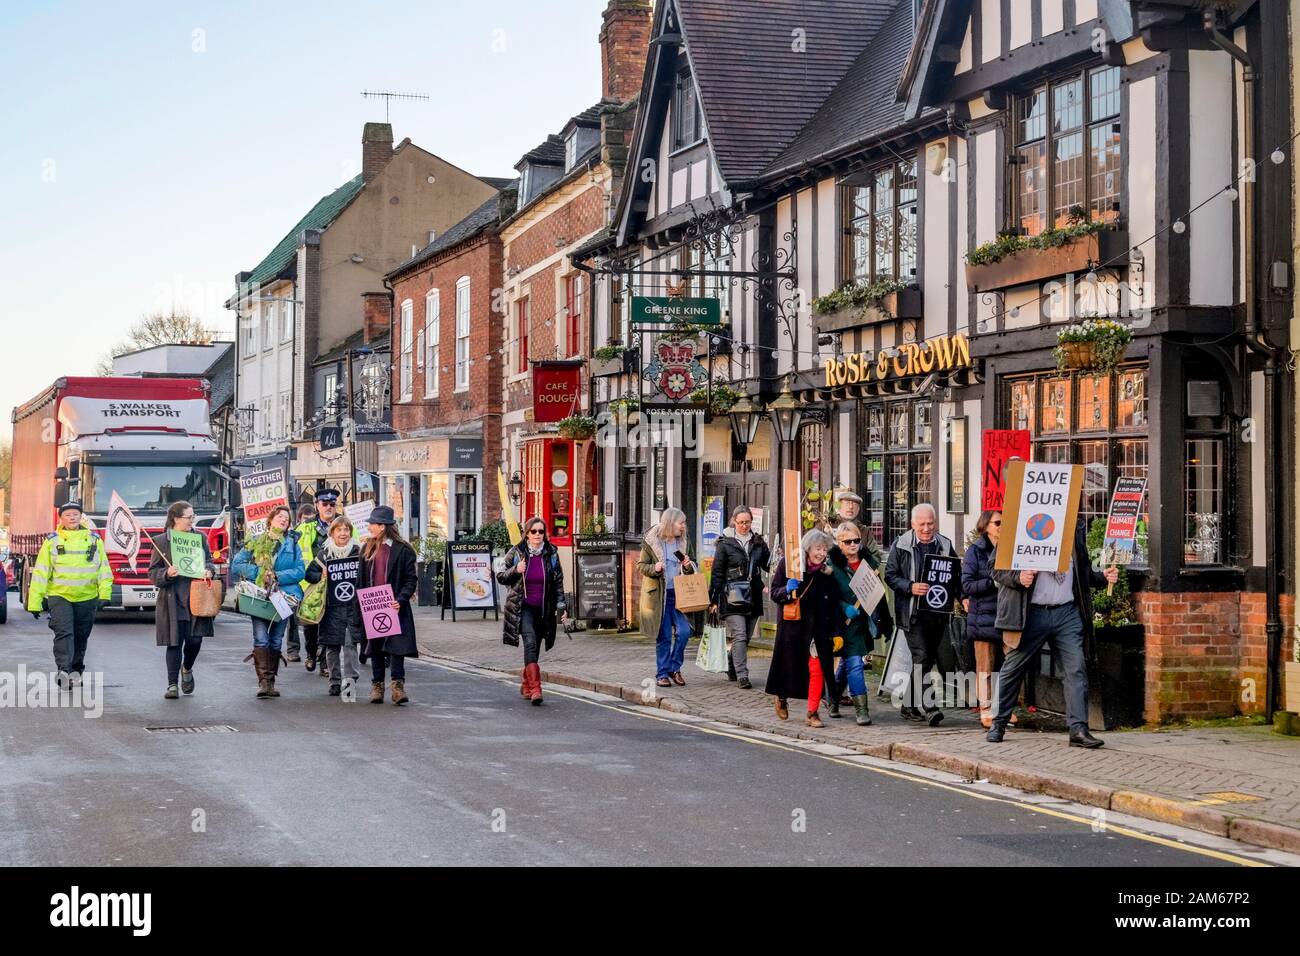 Extinction Rebellion, Climate action, protest, Stratford upon Avon, Warwickshire, England, UK Stock Photo